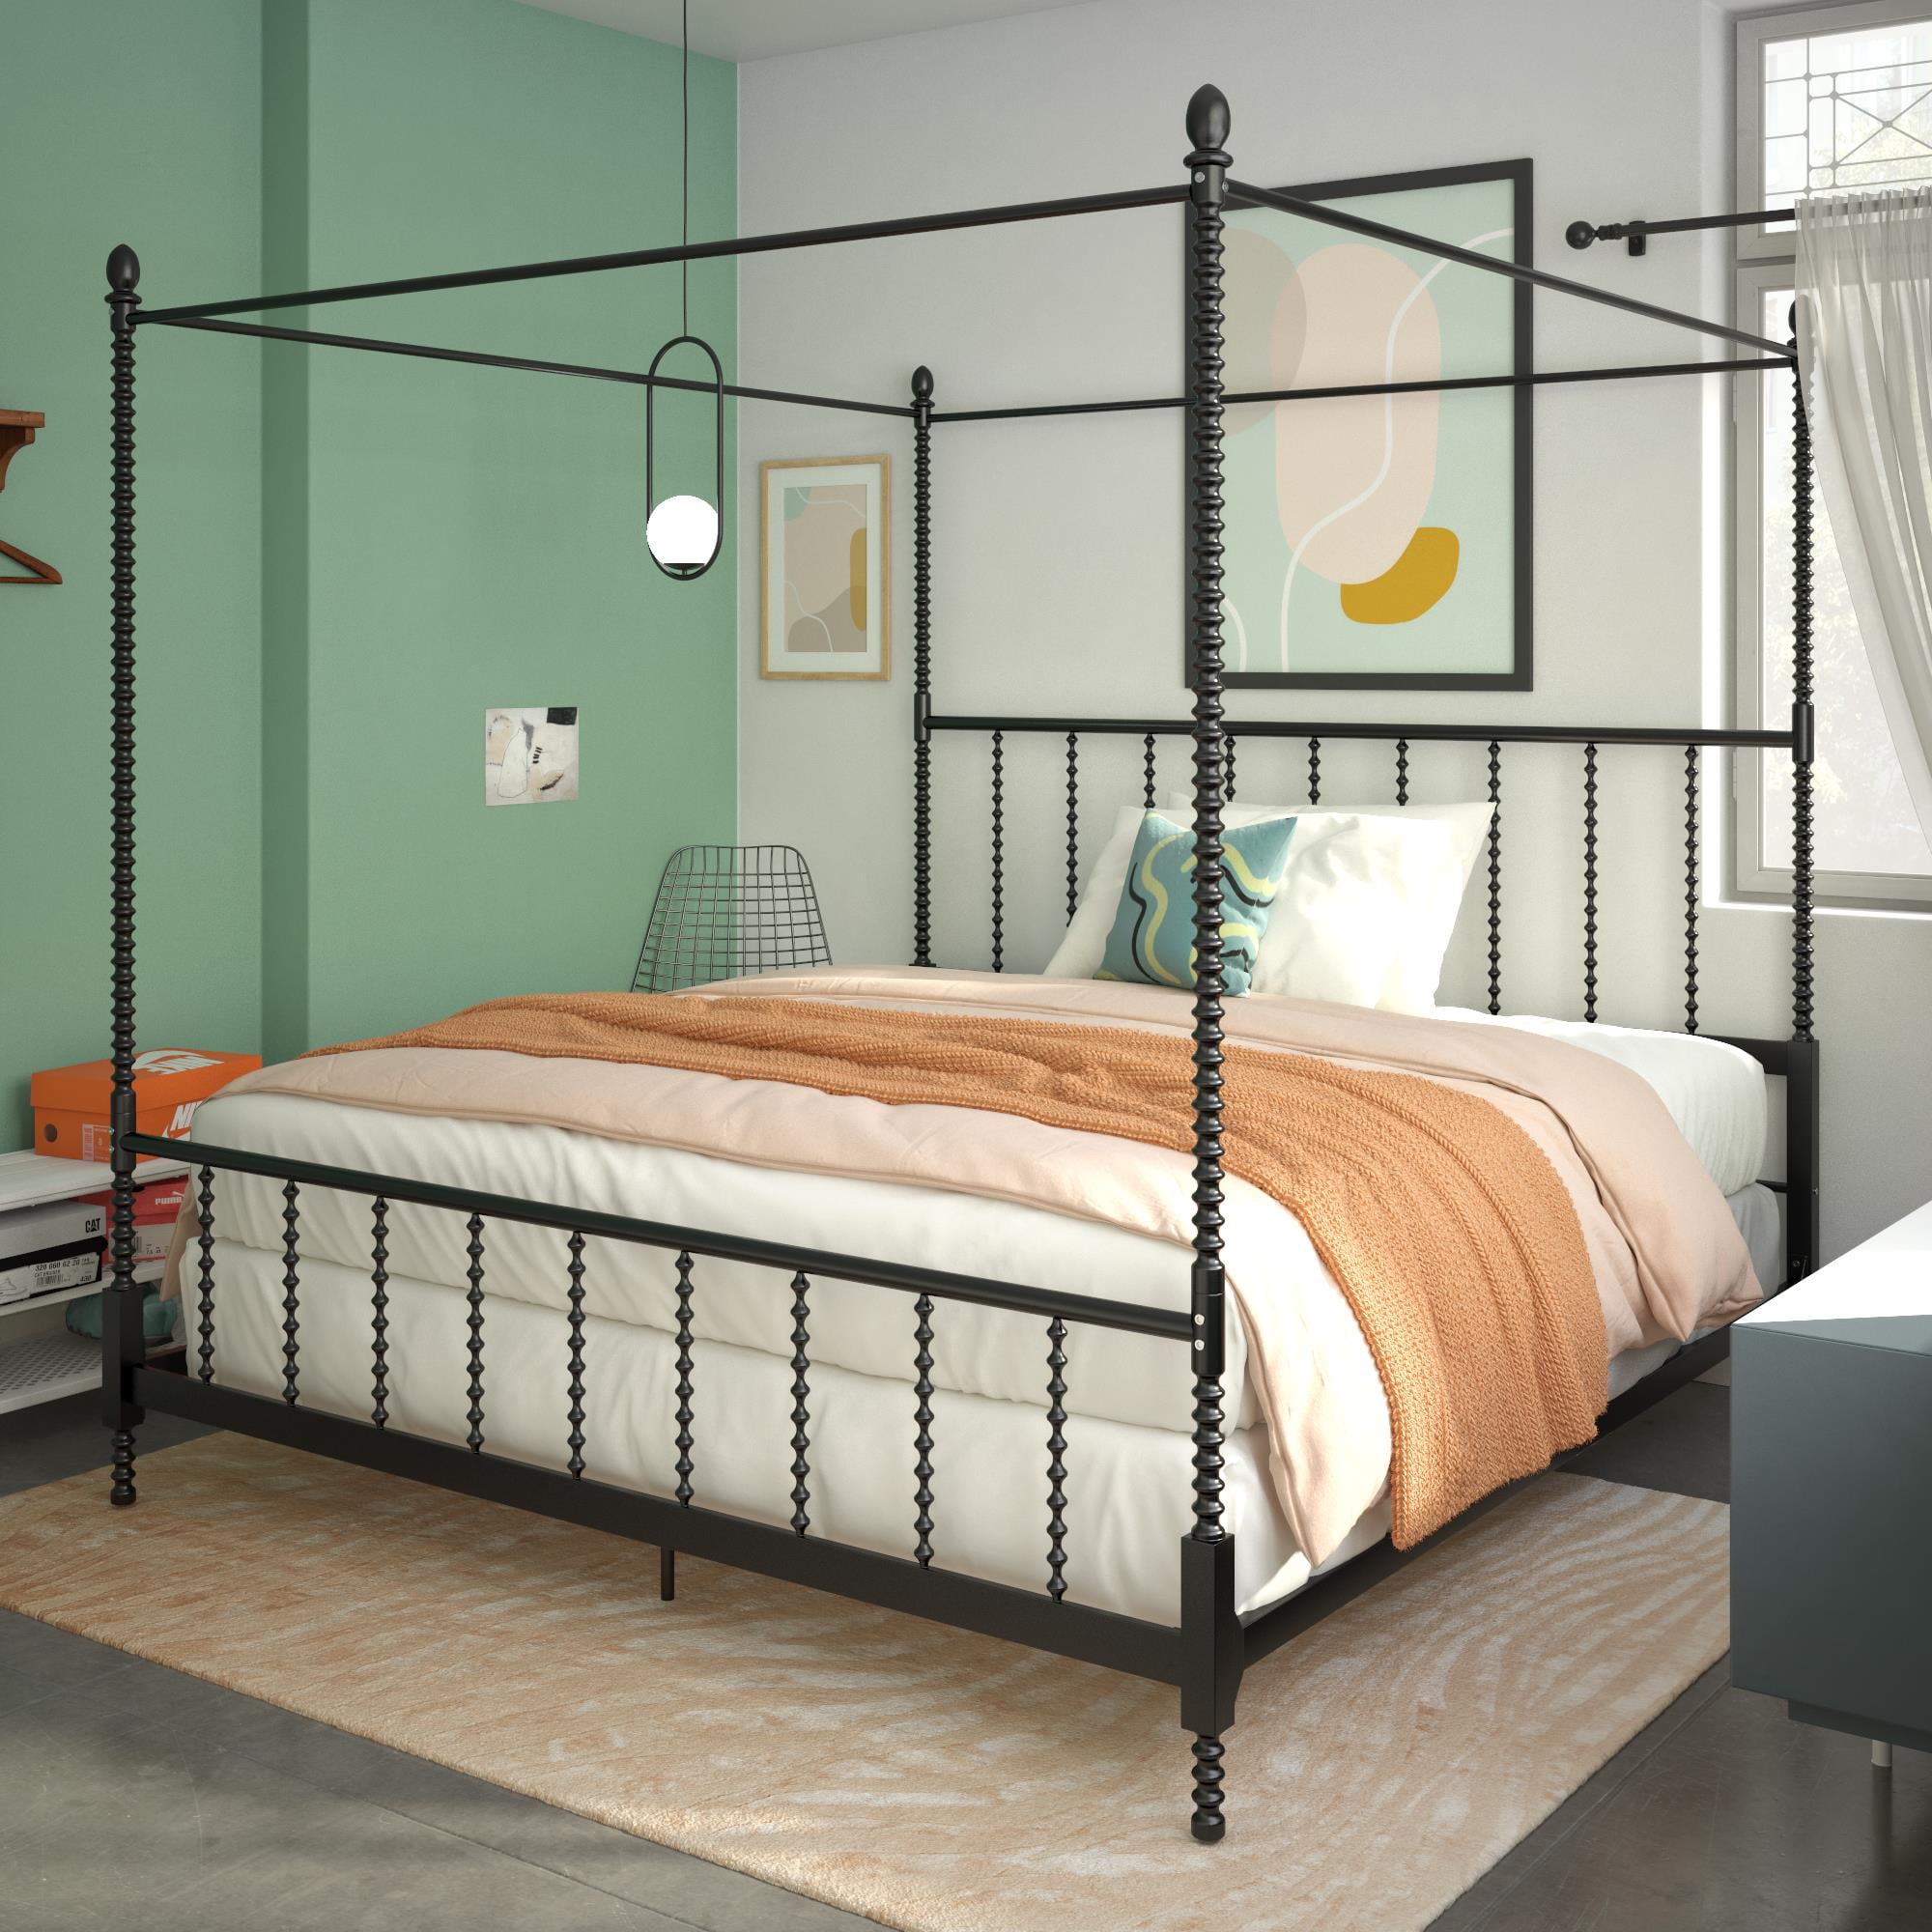 DHP Anika Metal Canopy Bed, King Size Frame, Black - Walmart.com